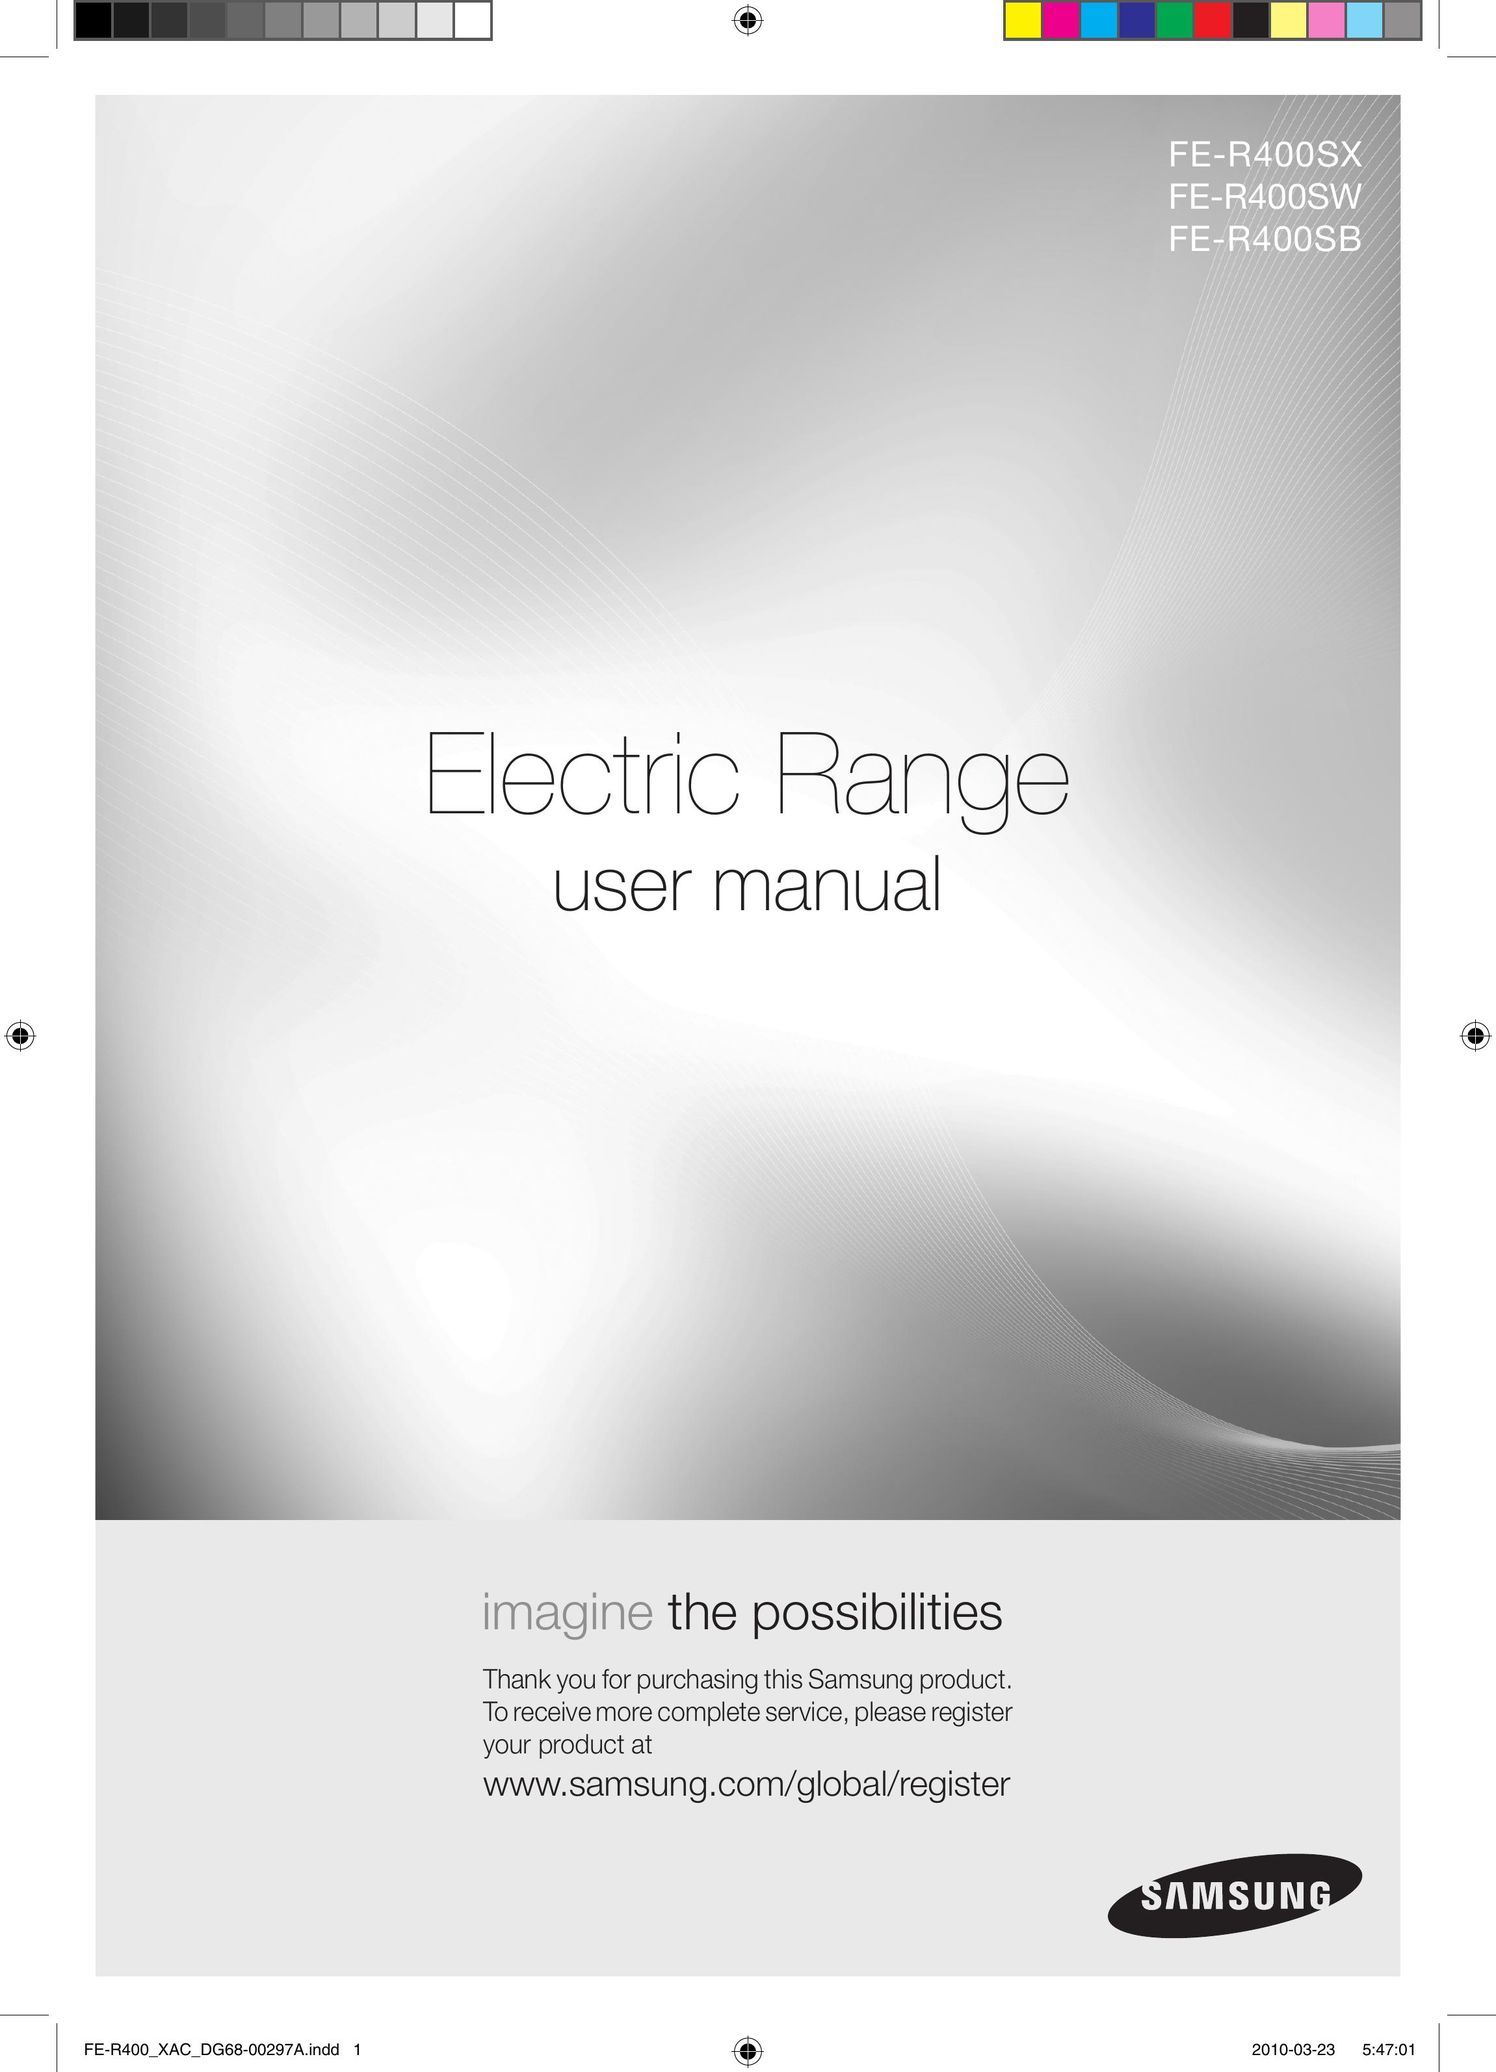 Samsung FE-R400SW Range User Manual